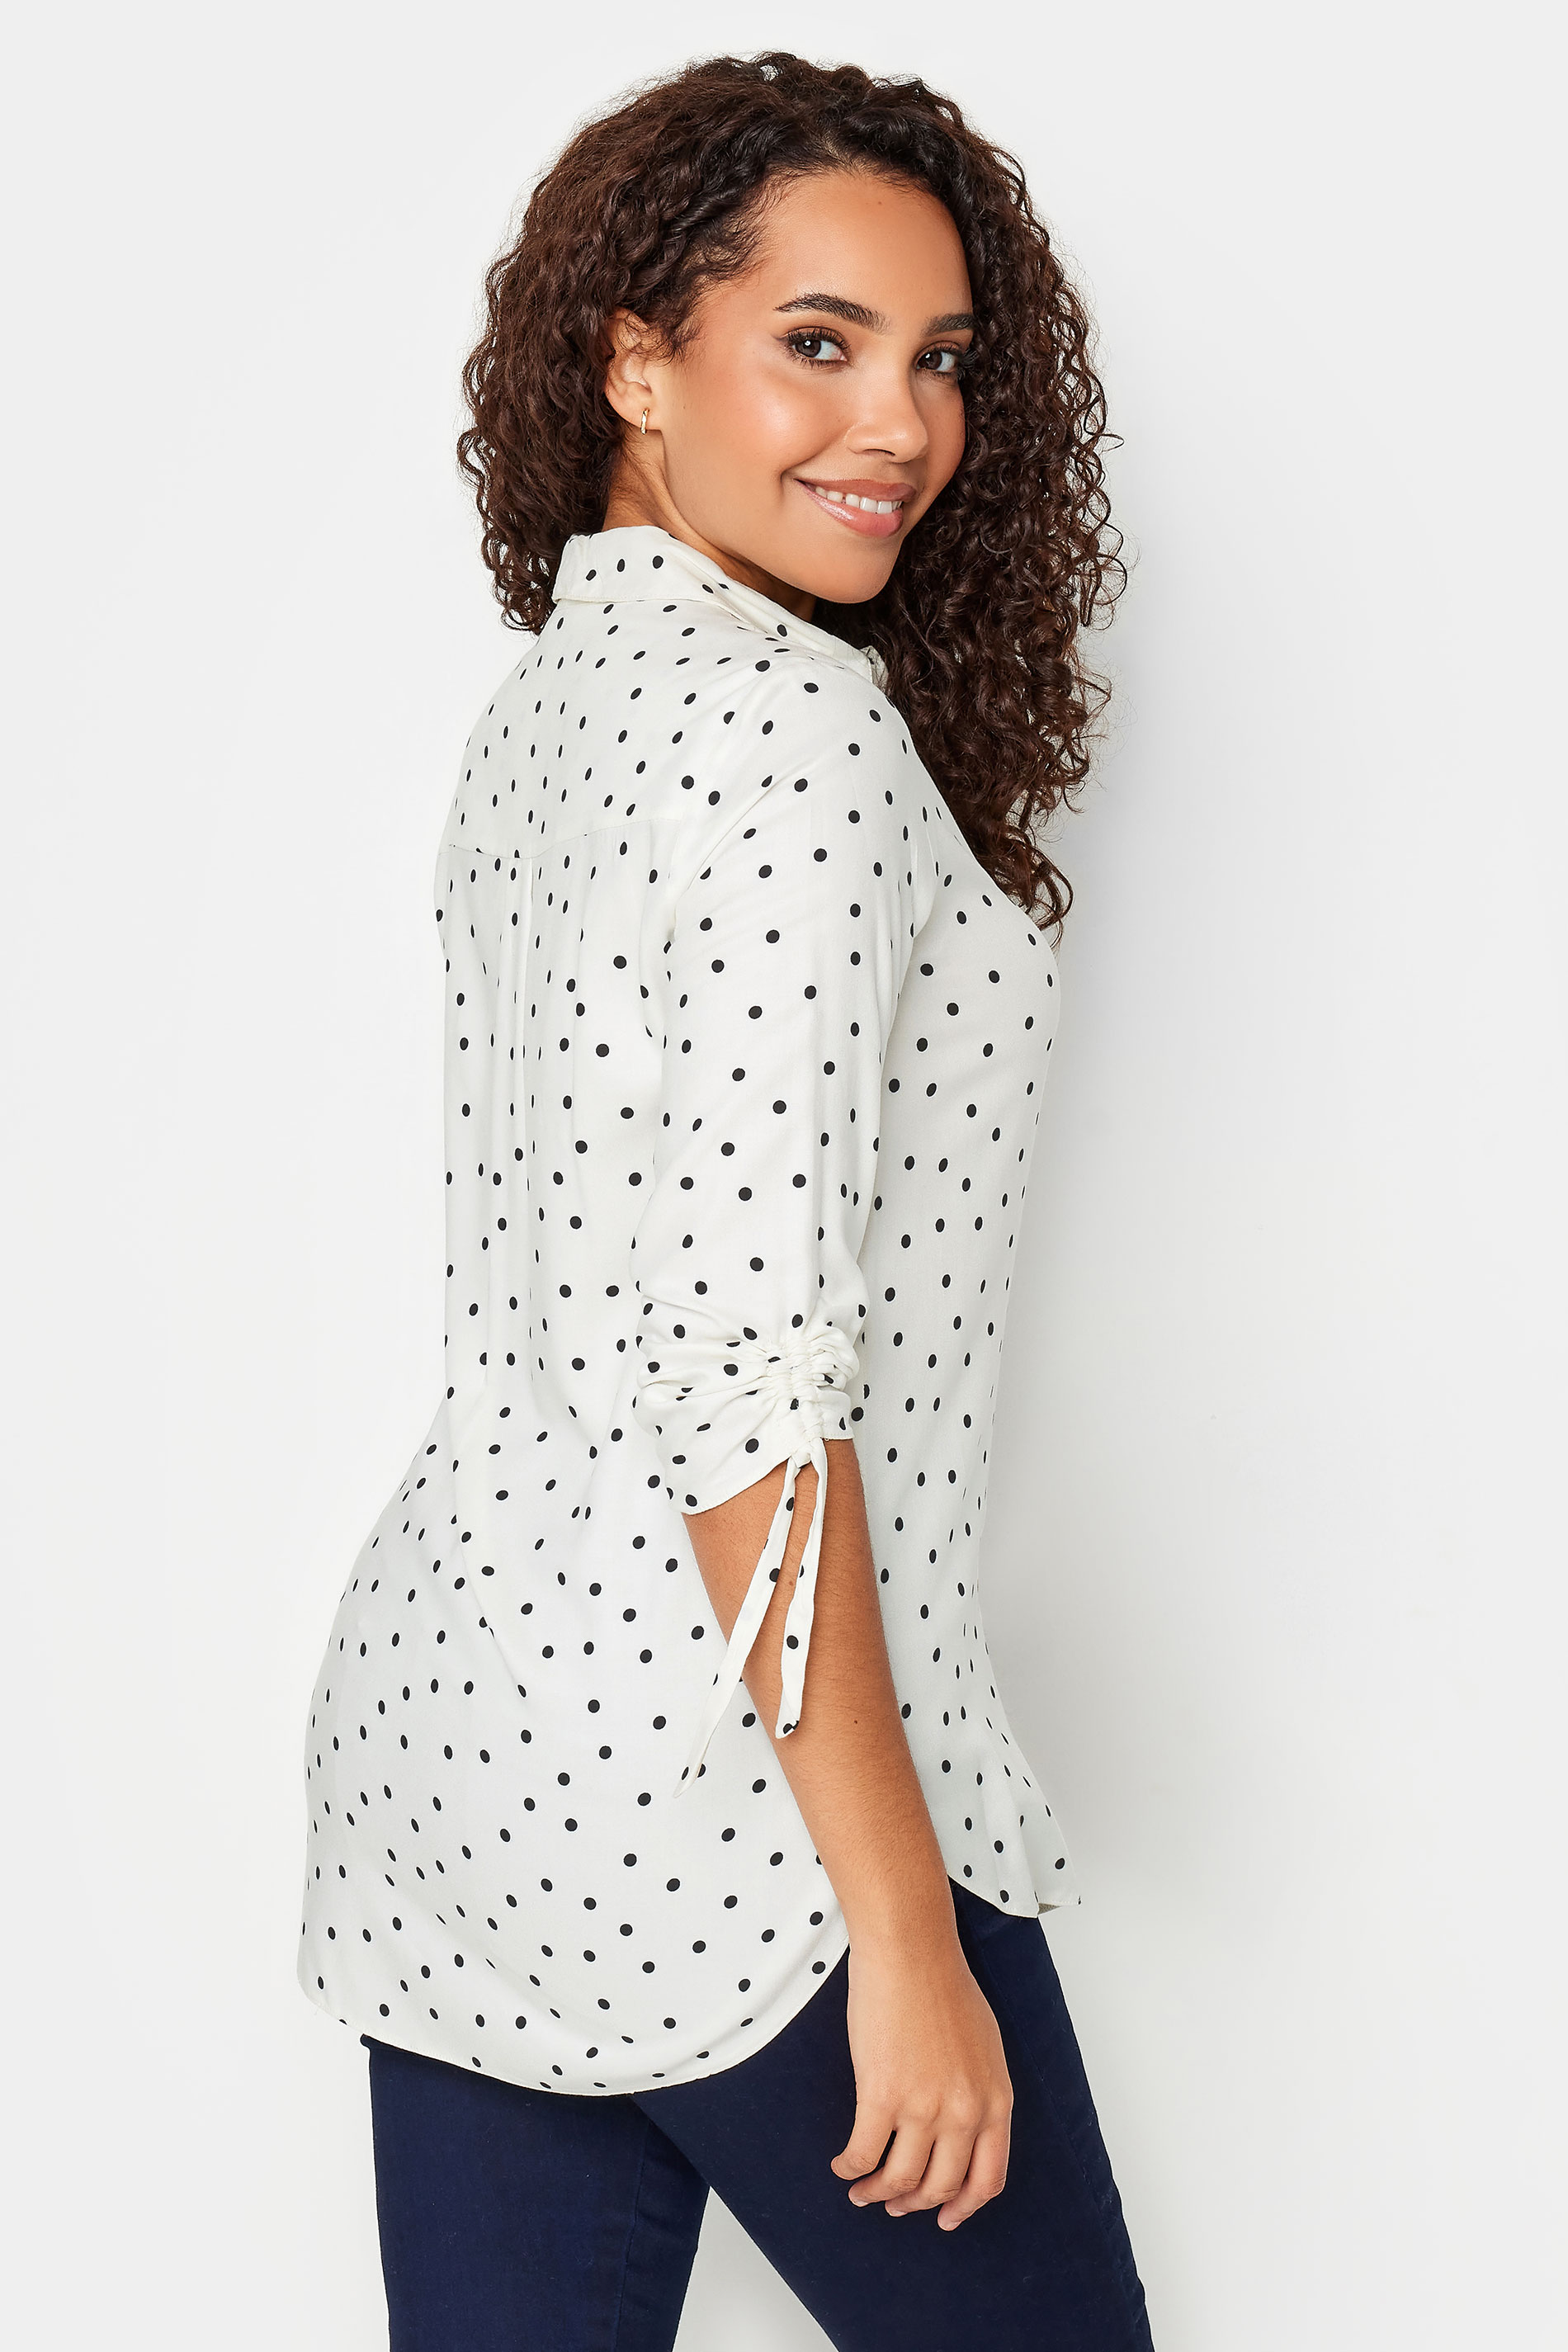 M&Co White Polka Dot Print Ruched Sleeve Shirt | M&Co 3